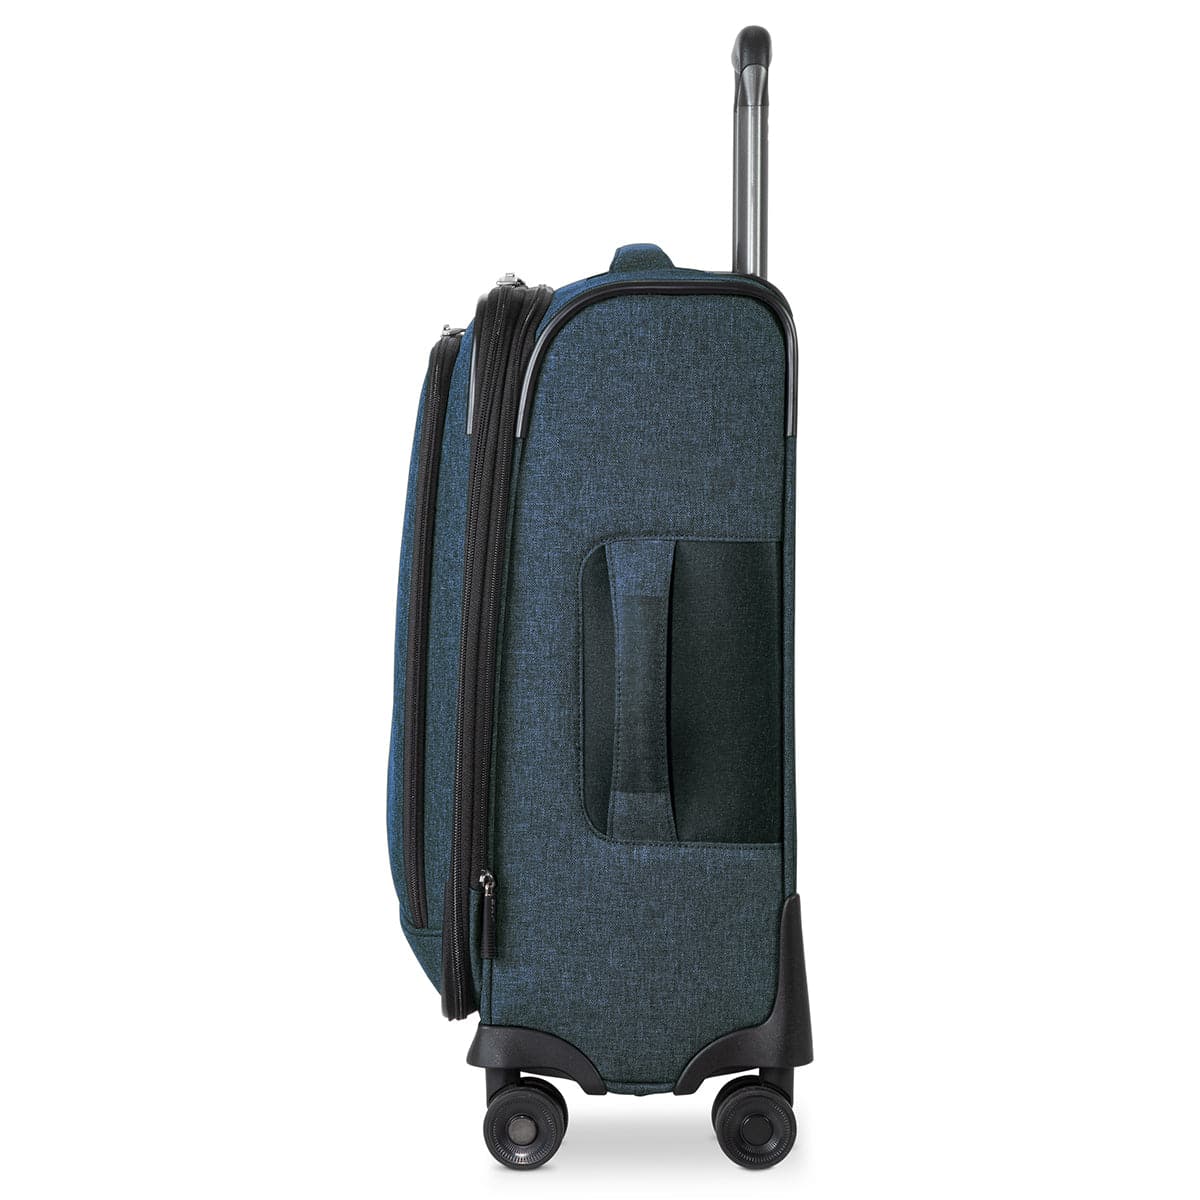 Ricardo Beverly Hills Malibu Bay 3.0 Carry-On Luggage